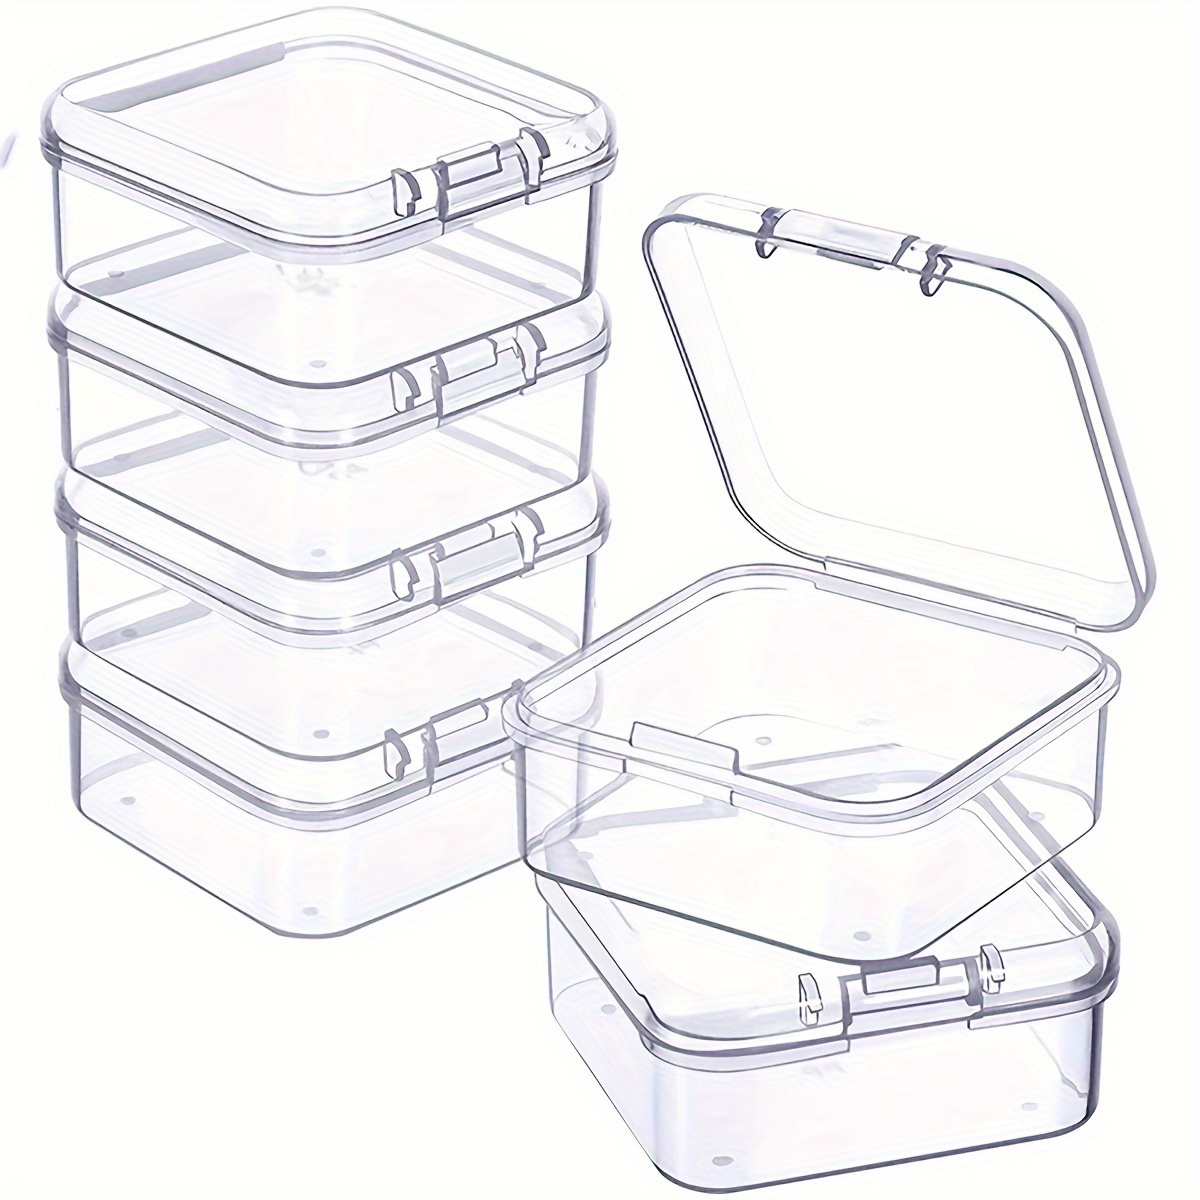 Plastic Storage Bins Clear Storage Box With Lids Multipurpose